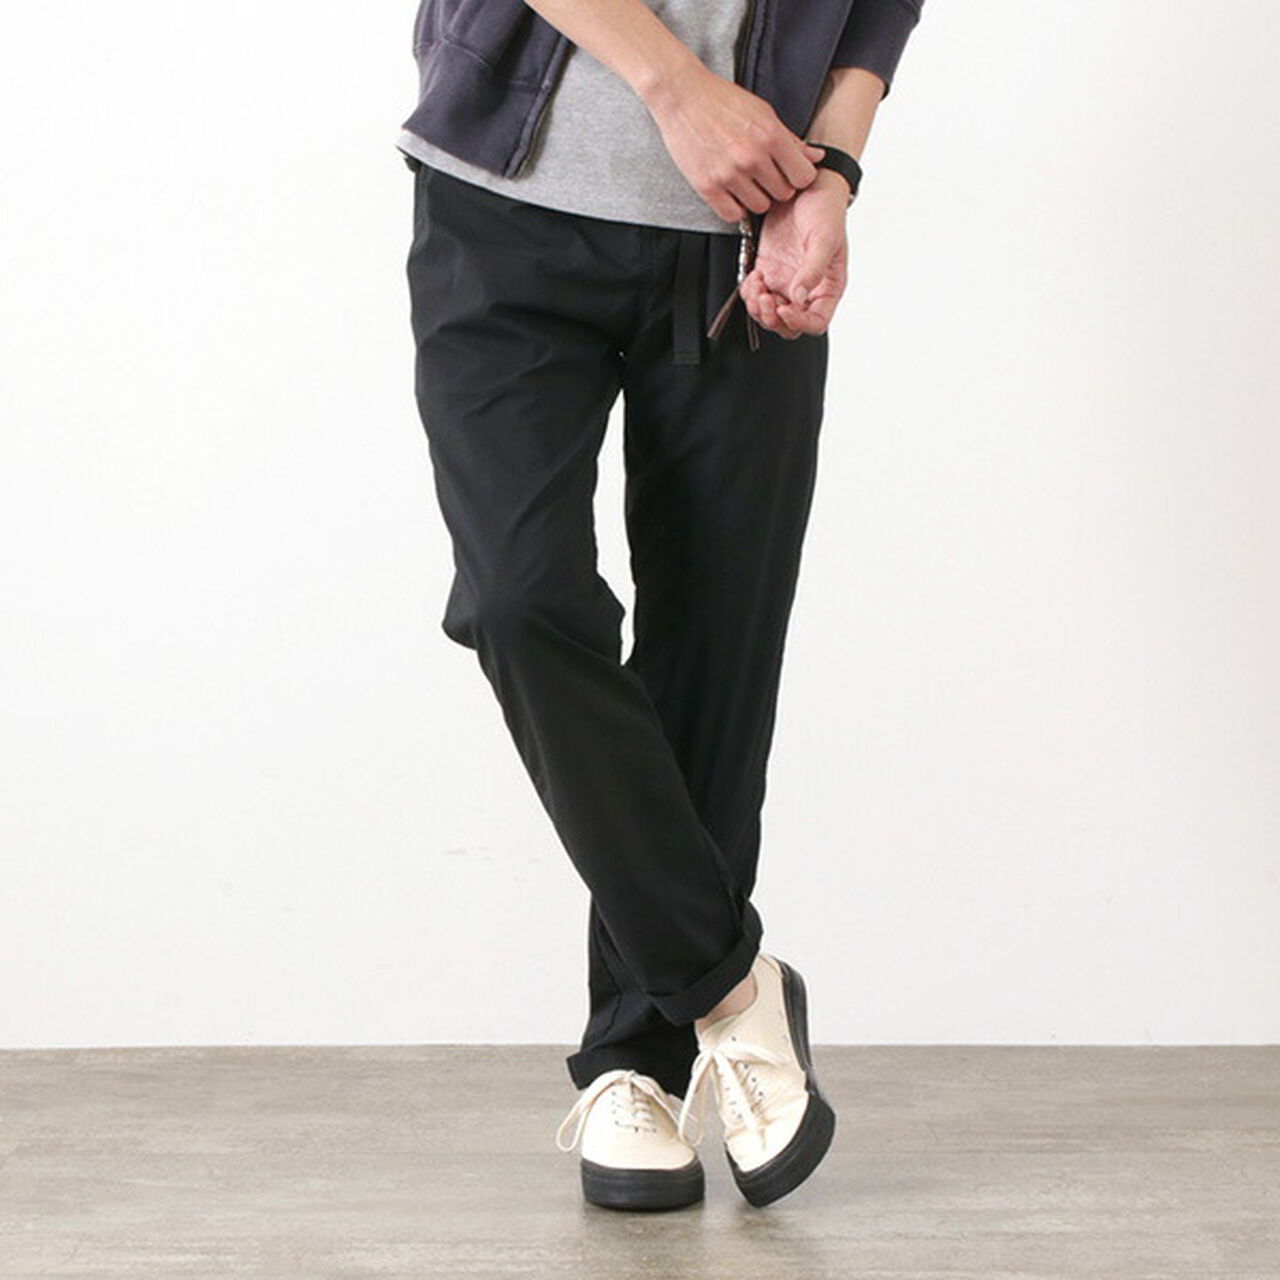 Polyester Stretch Easy Pants,Black, large image number 0